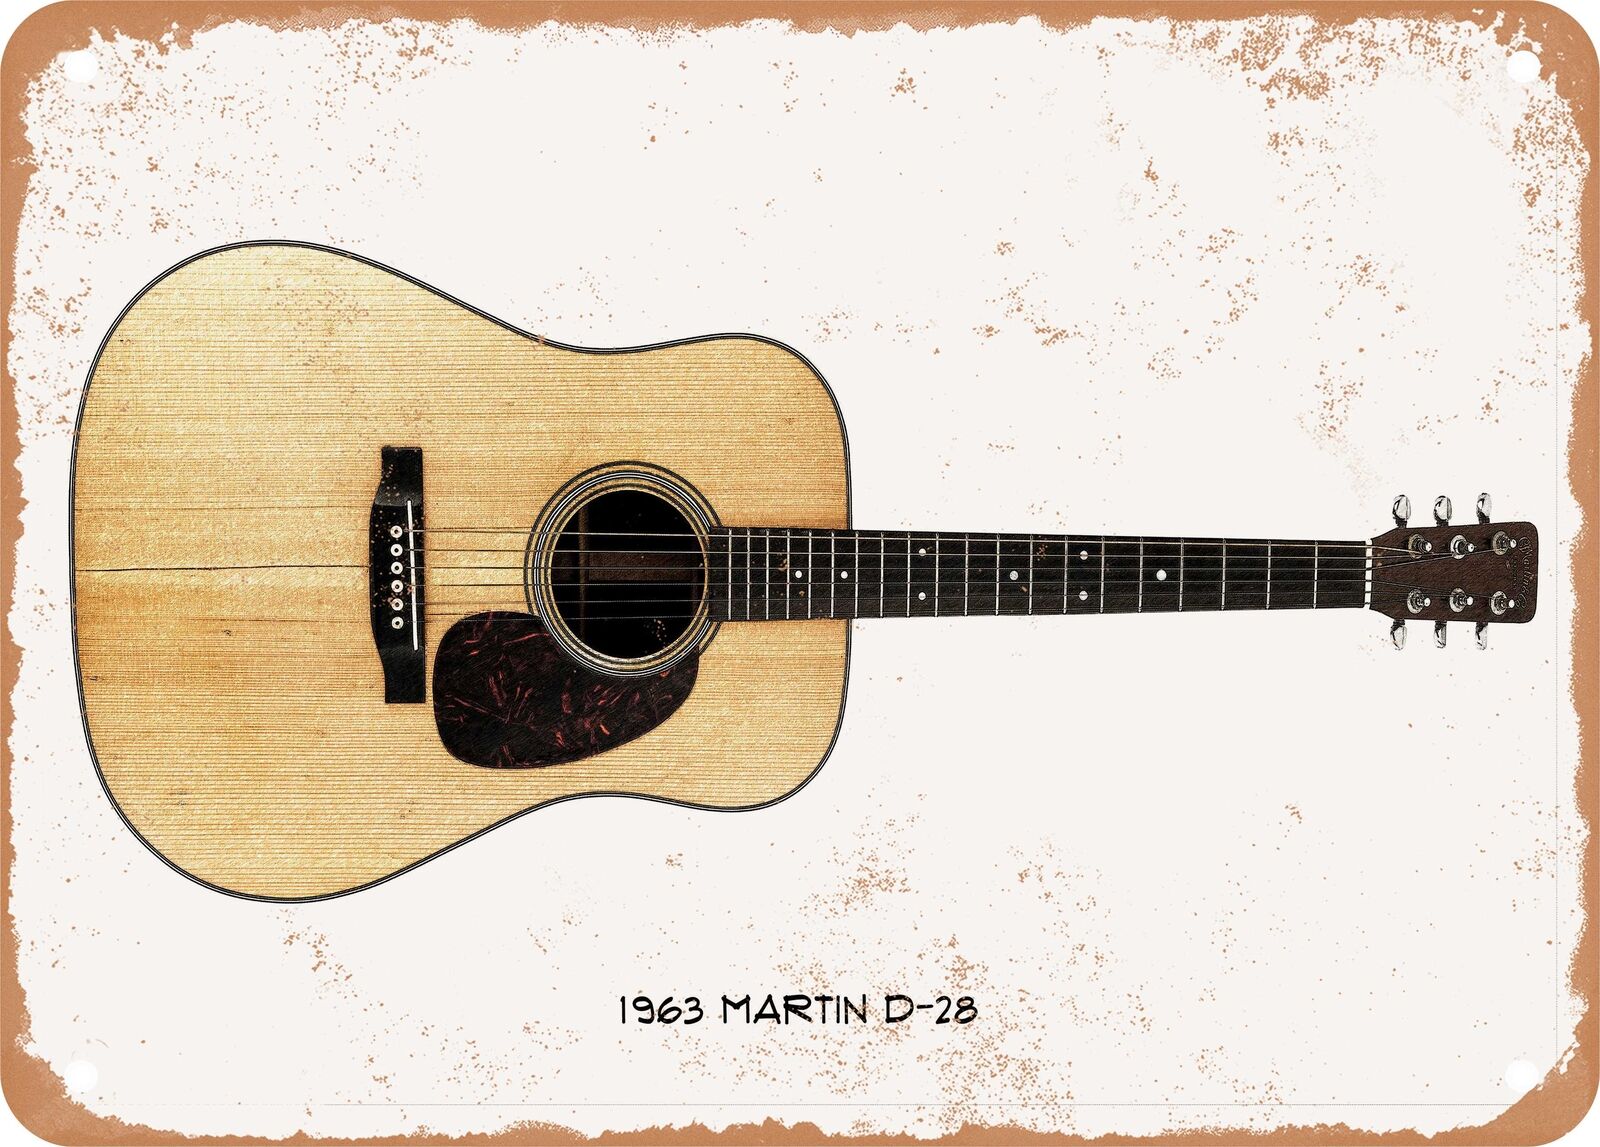 Guitar Art - 1963 Martin D-28 Pencil Drawing - Rusty Look Metal Sign